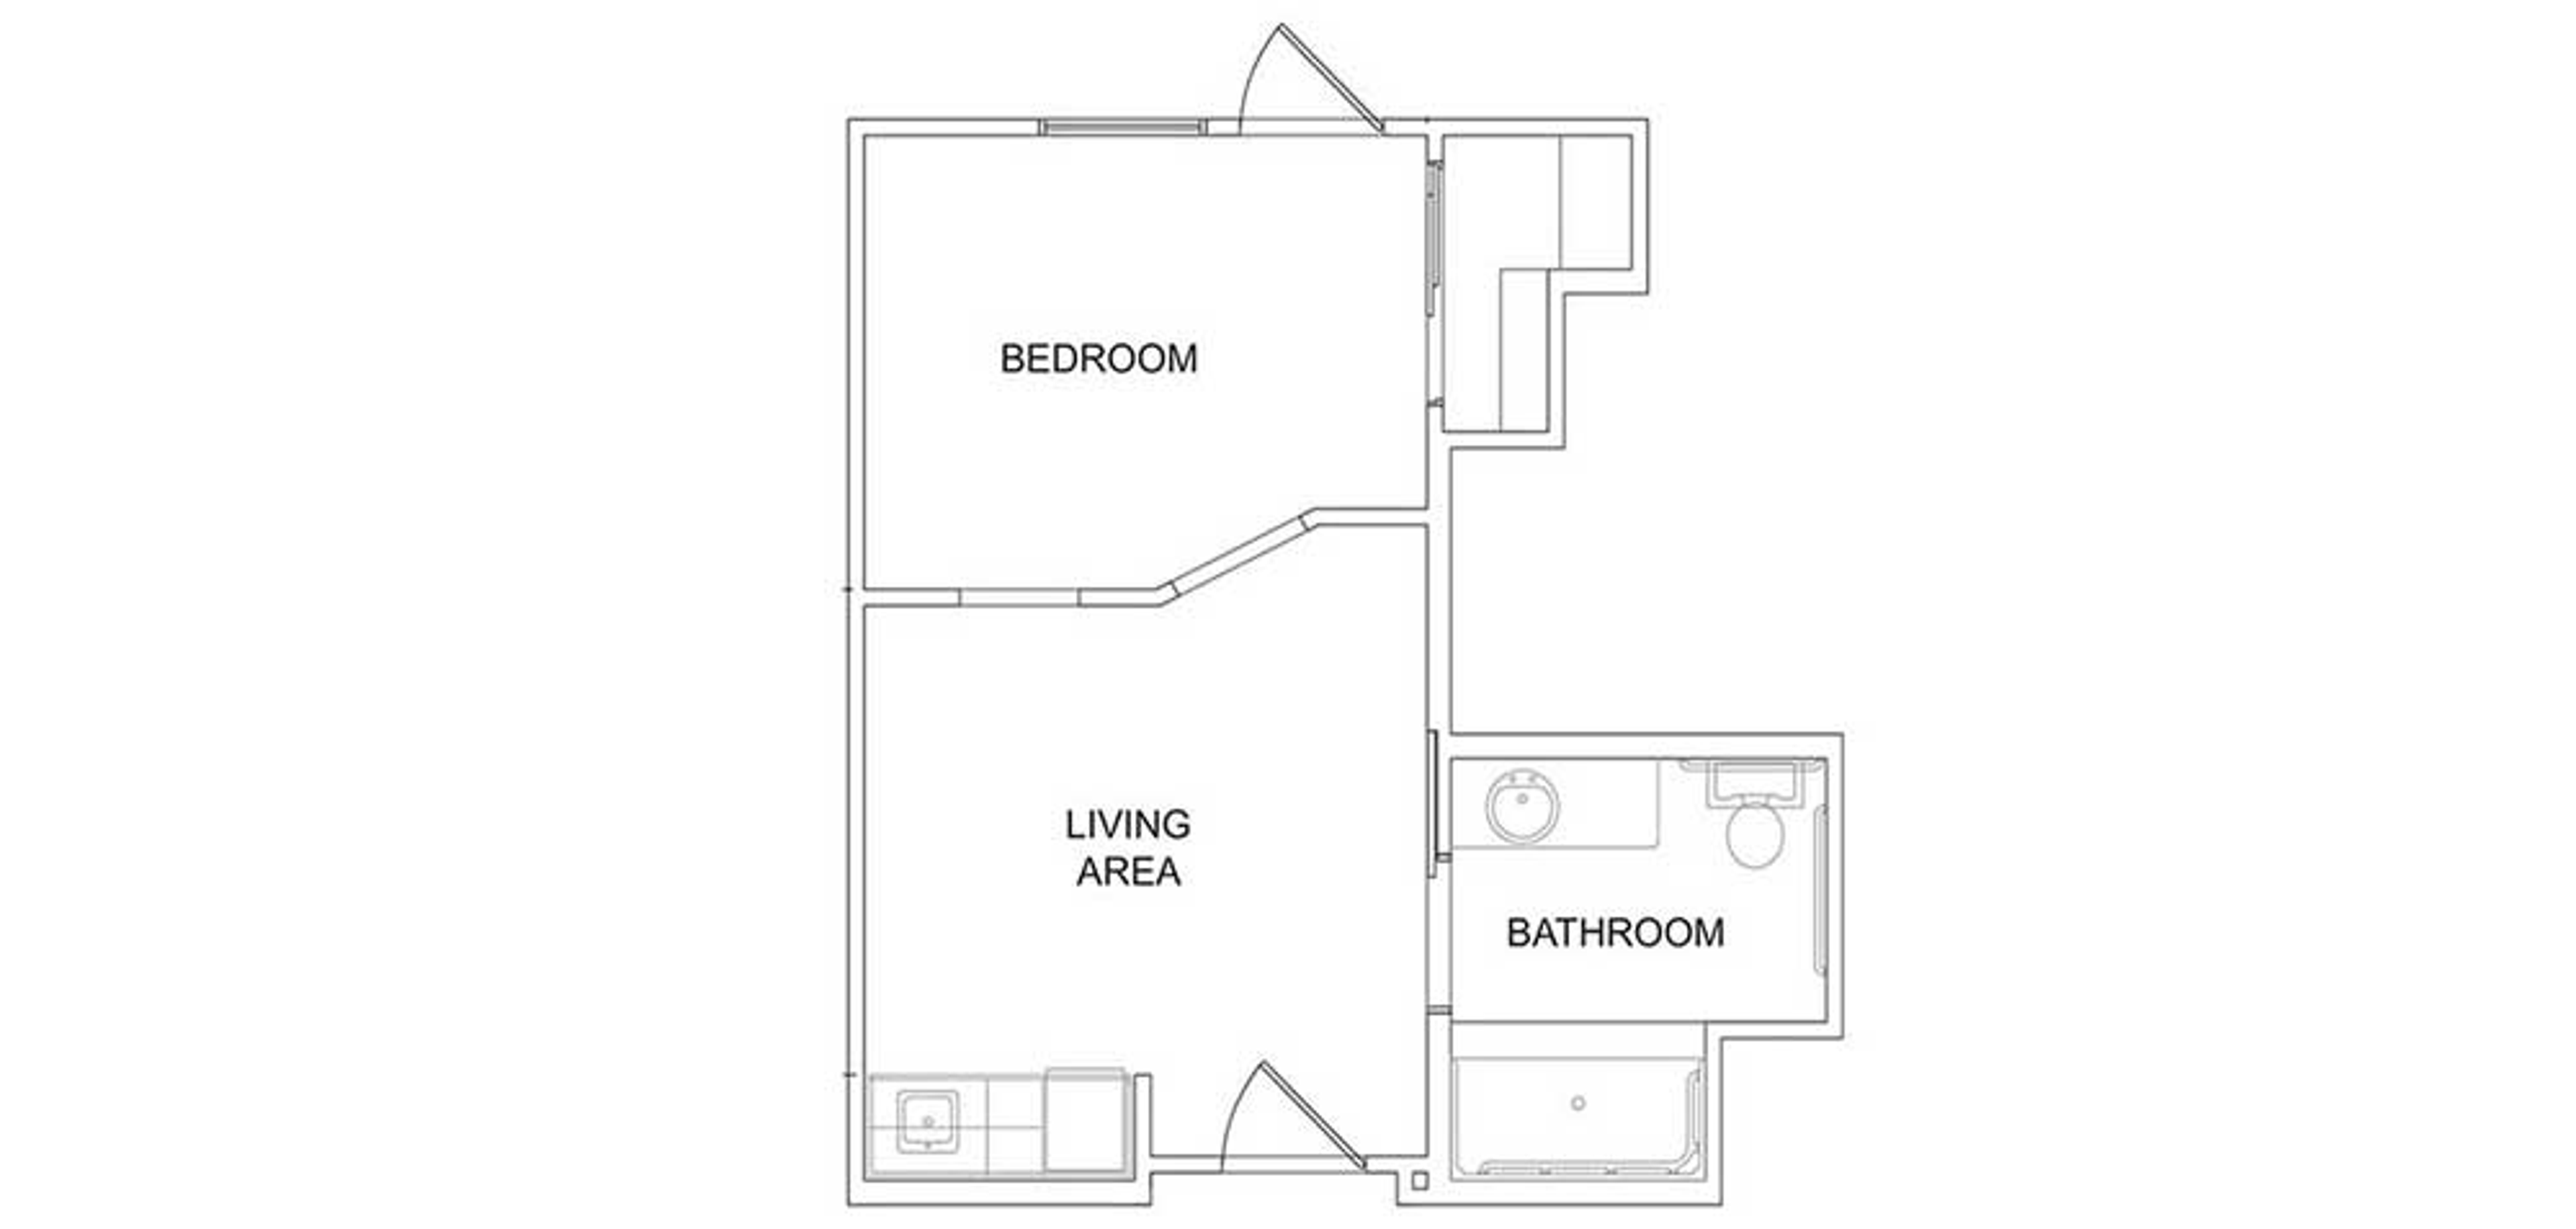 Floorplan - Santa Fe Trails - 1 bed, 1 bath, Courtyard Assisted Living